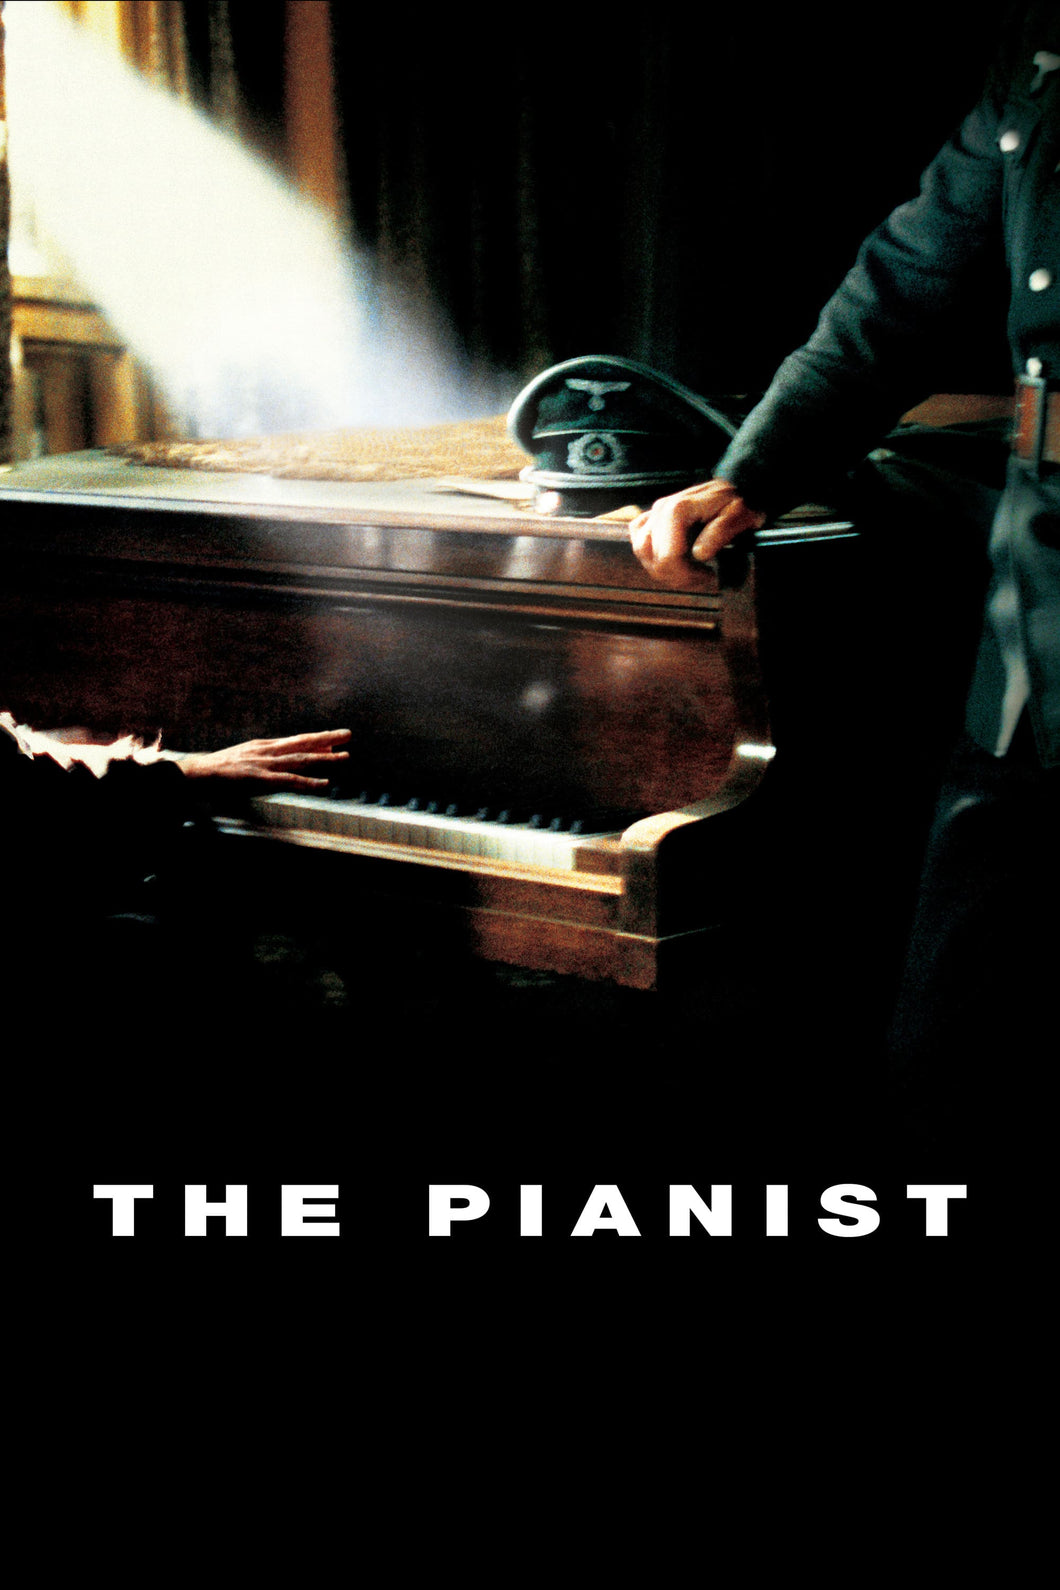 The Pianist (2002) V2 Movie Poster Framed or Unframed Glossy Poster Free UK Shipping!!!